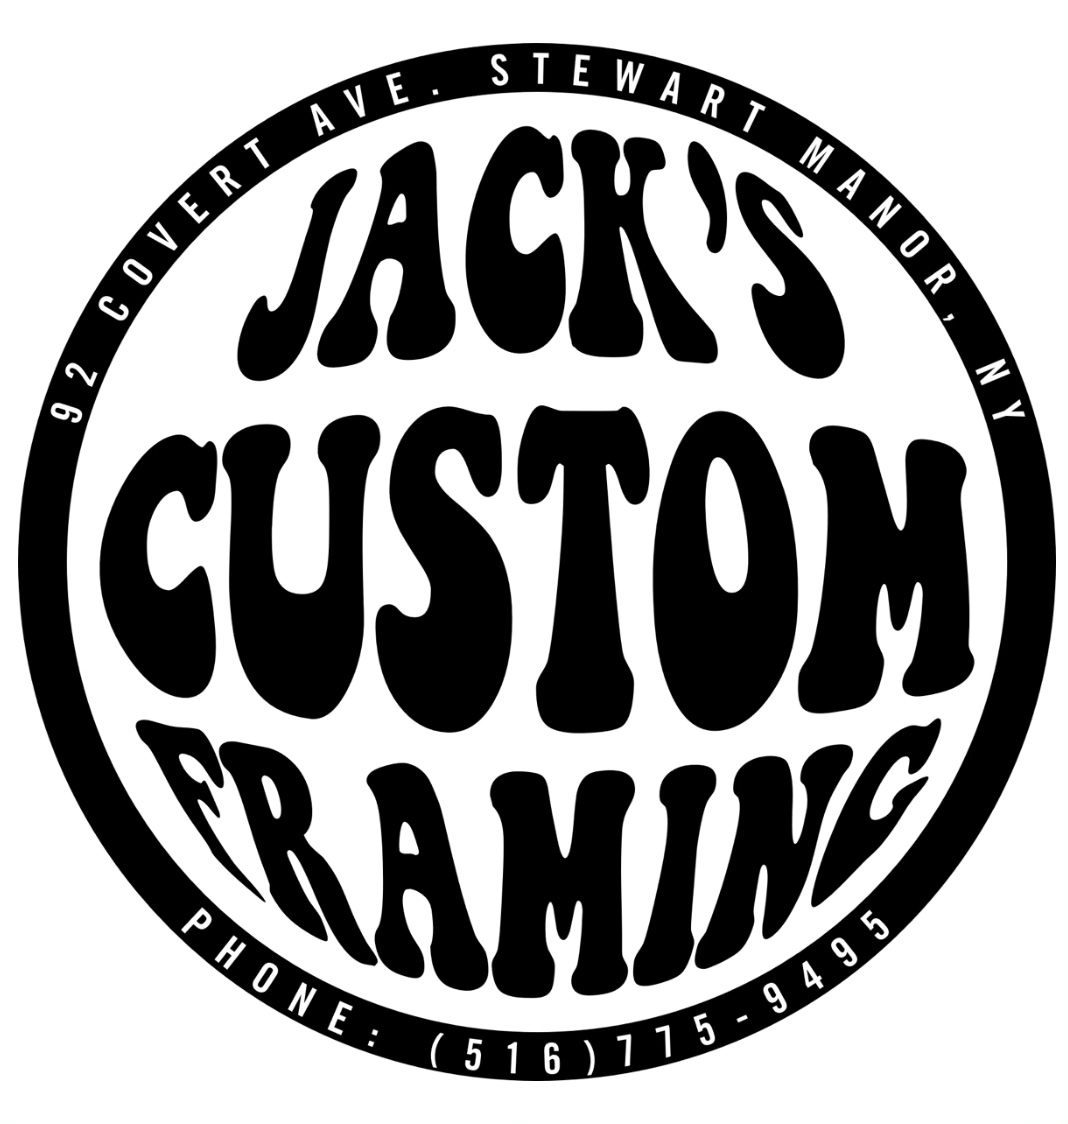 Jack's Custom Framing